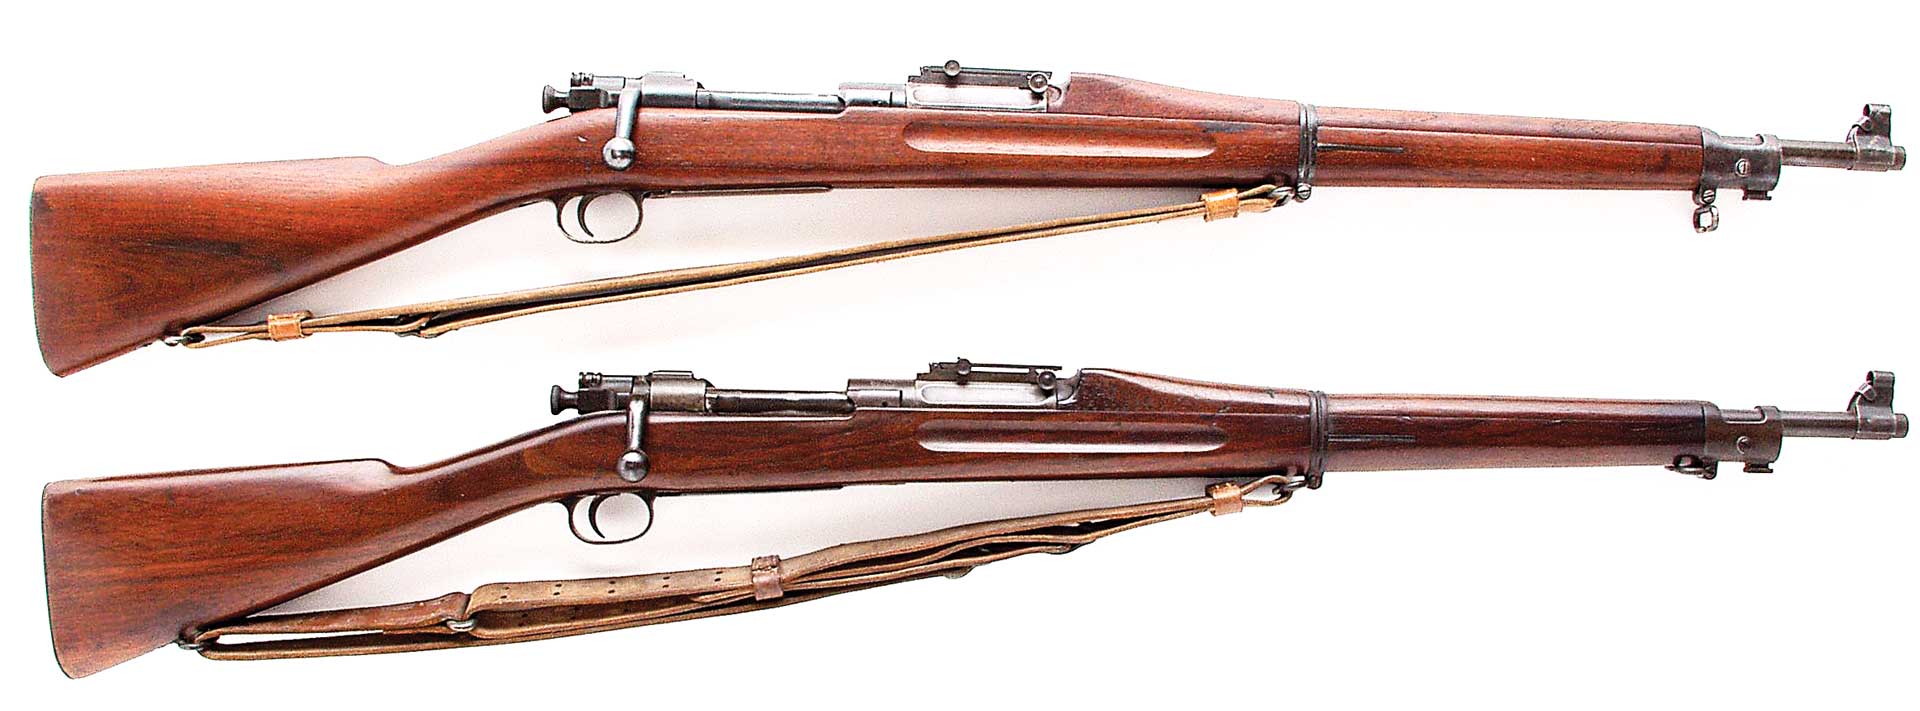 two rifle wooden metal leather strap sling gun bolt-action military surplus guns